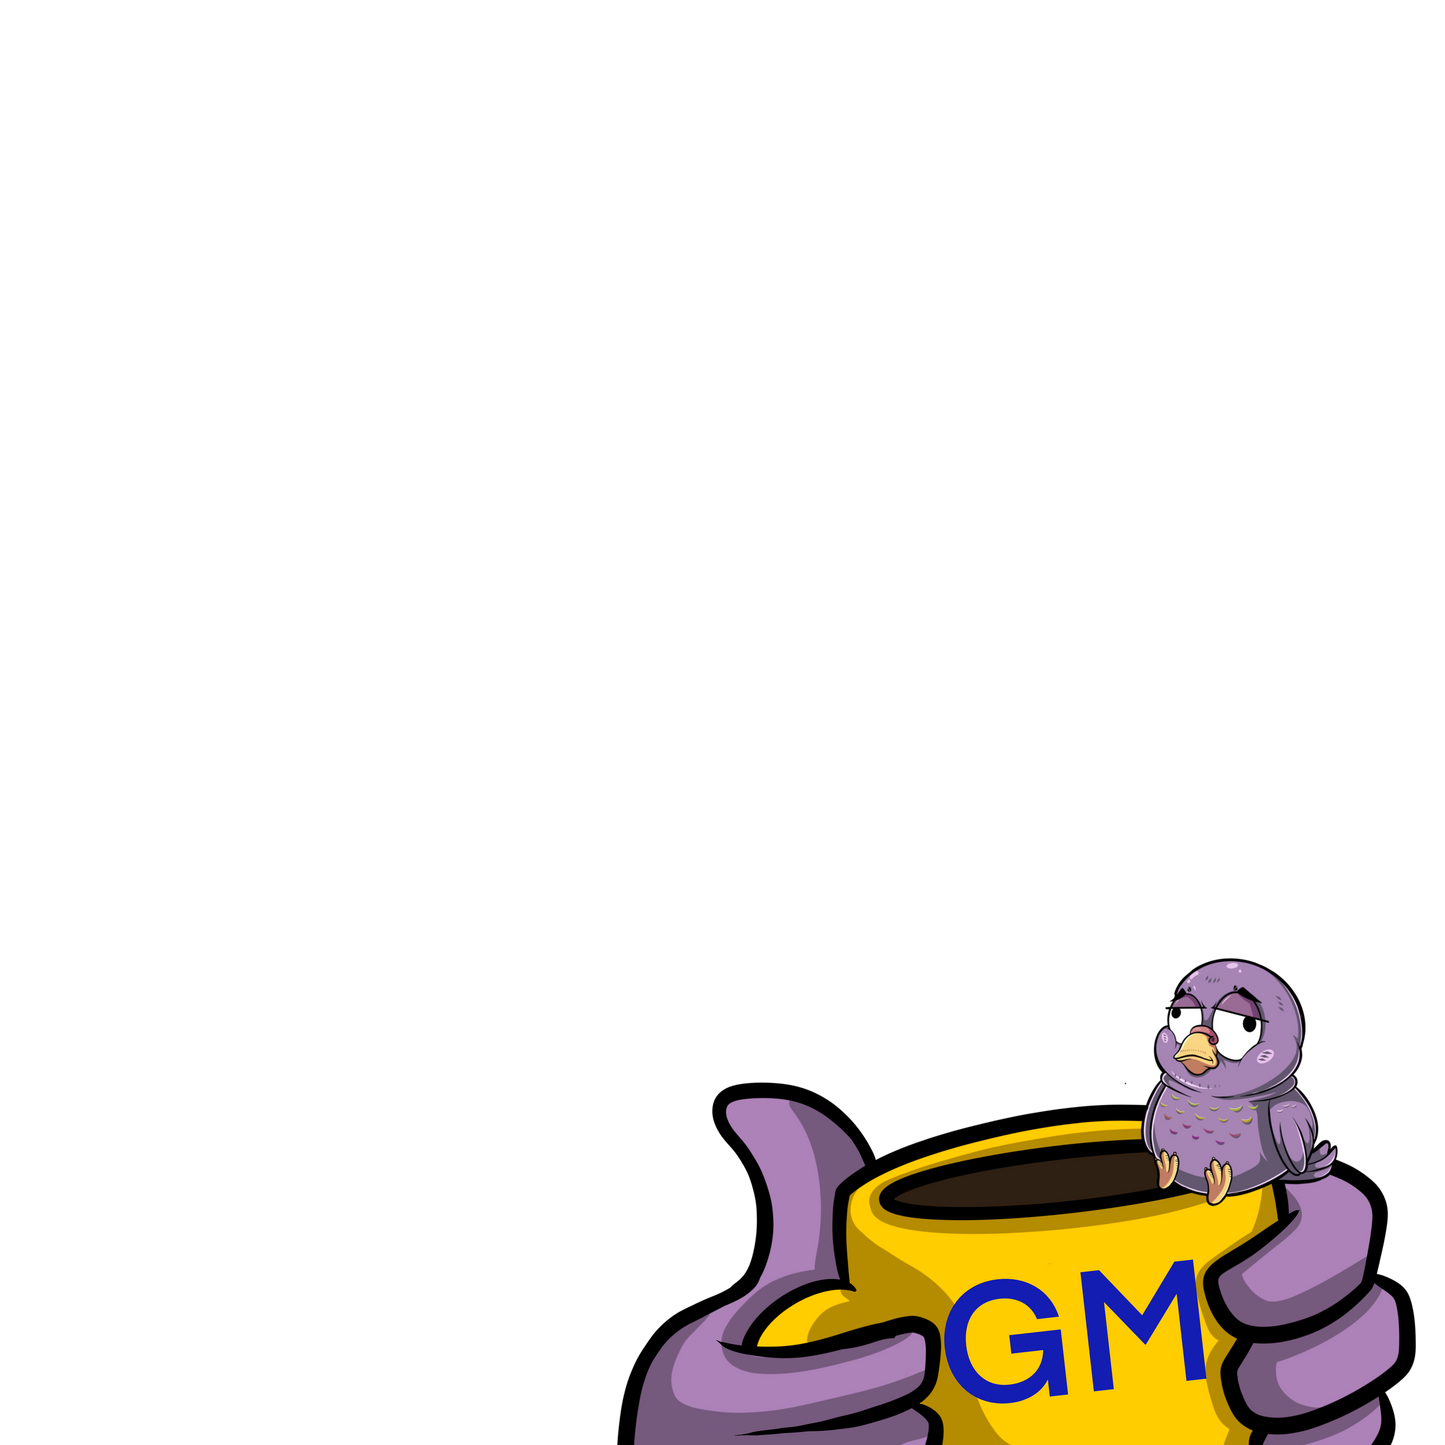 GM Mug with sitting Baby (Yel/Blu)